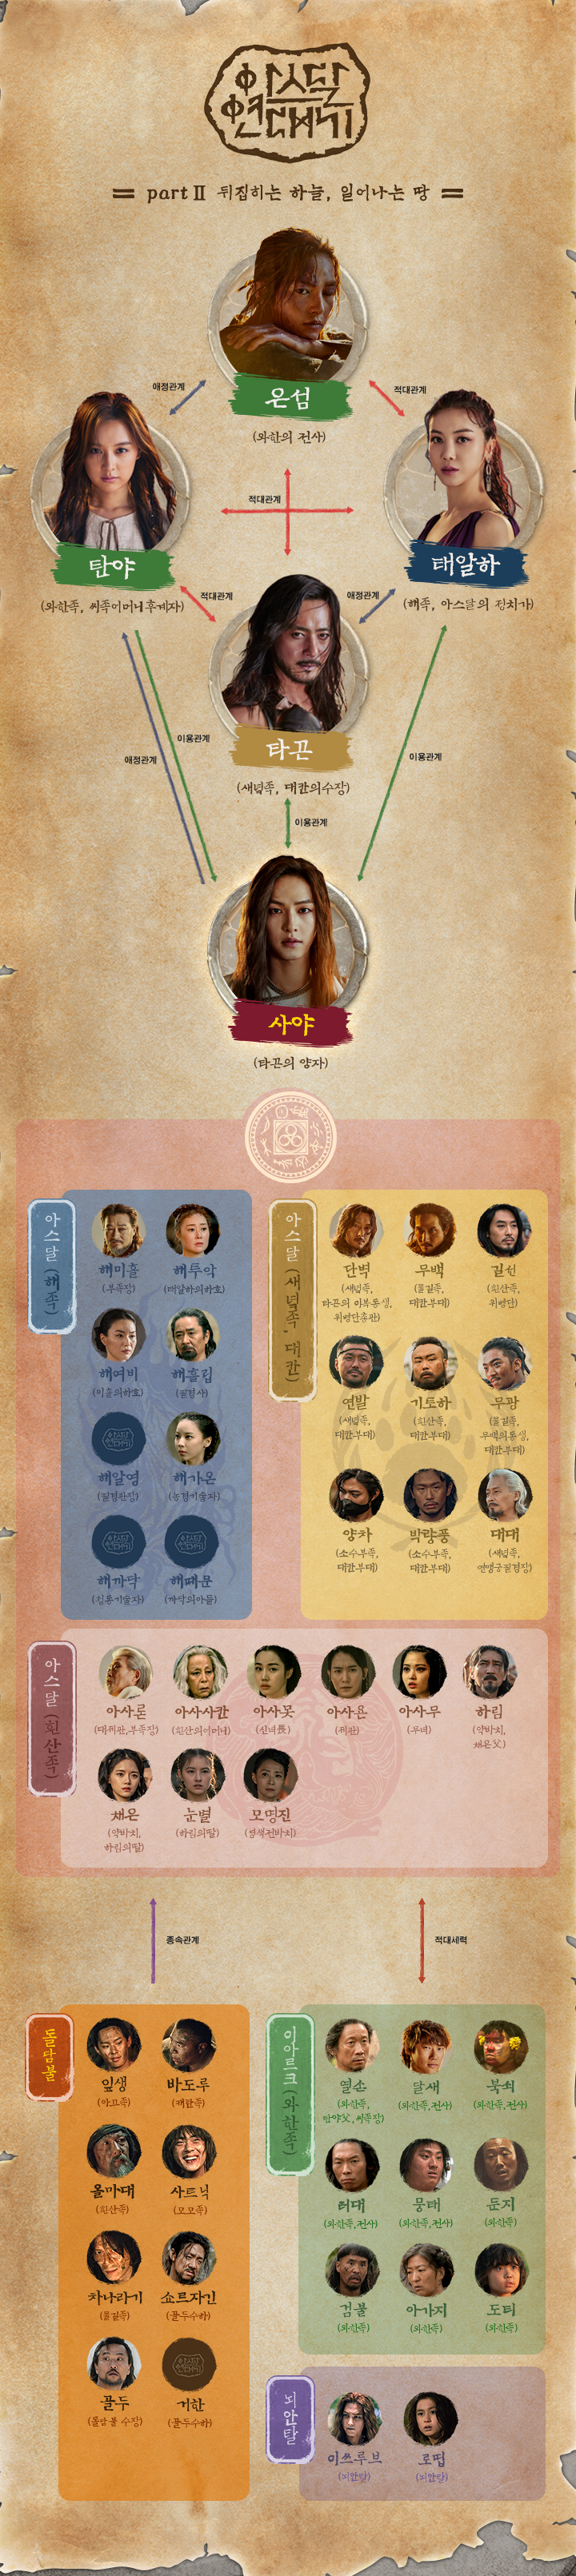 tvN‘아스달 연대기’ 홈페이지 인물관계도 사진 캡처